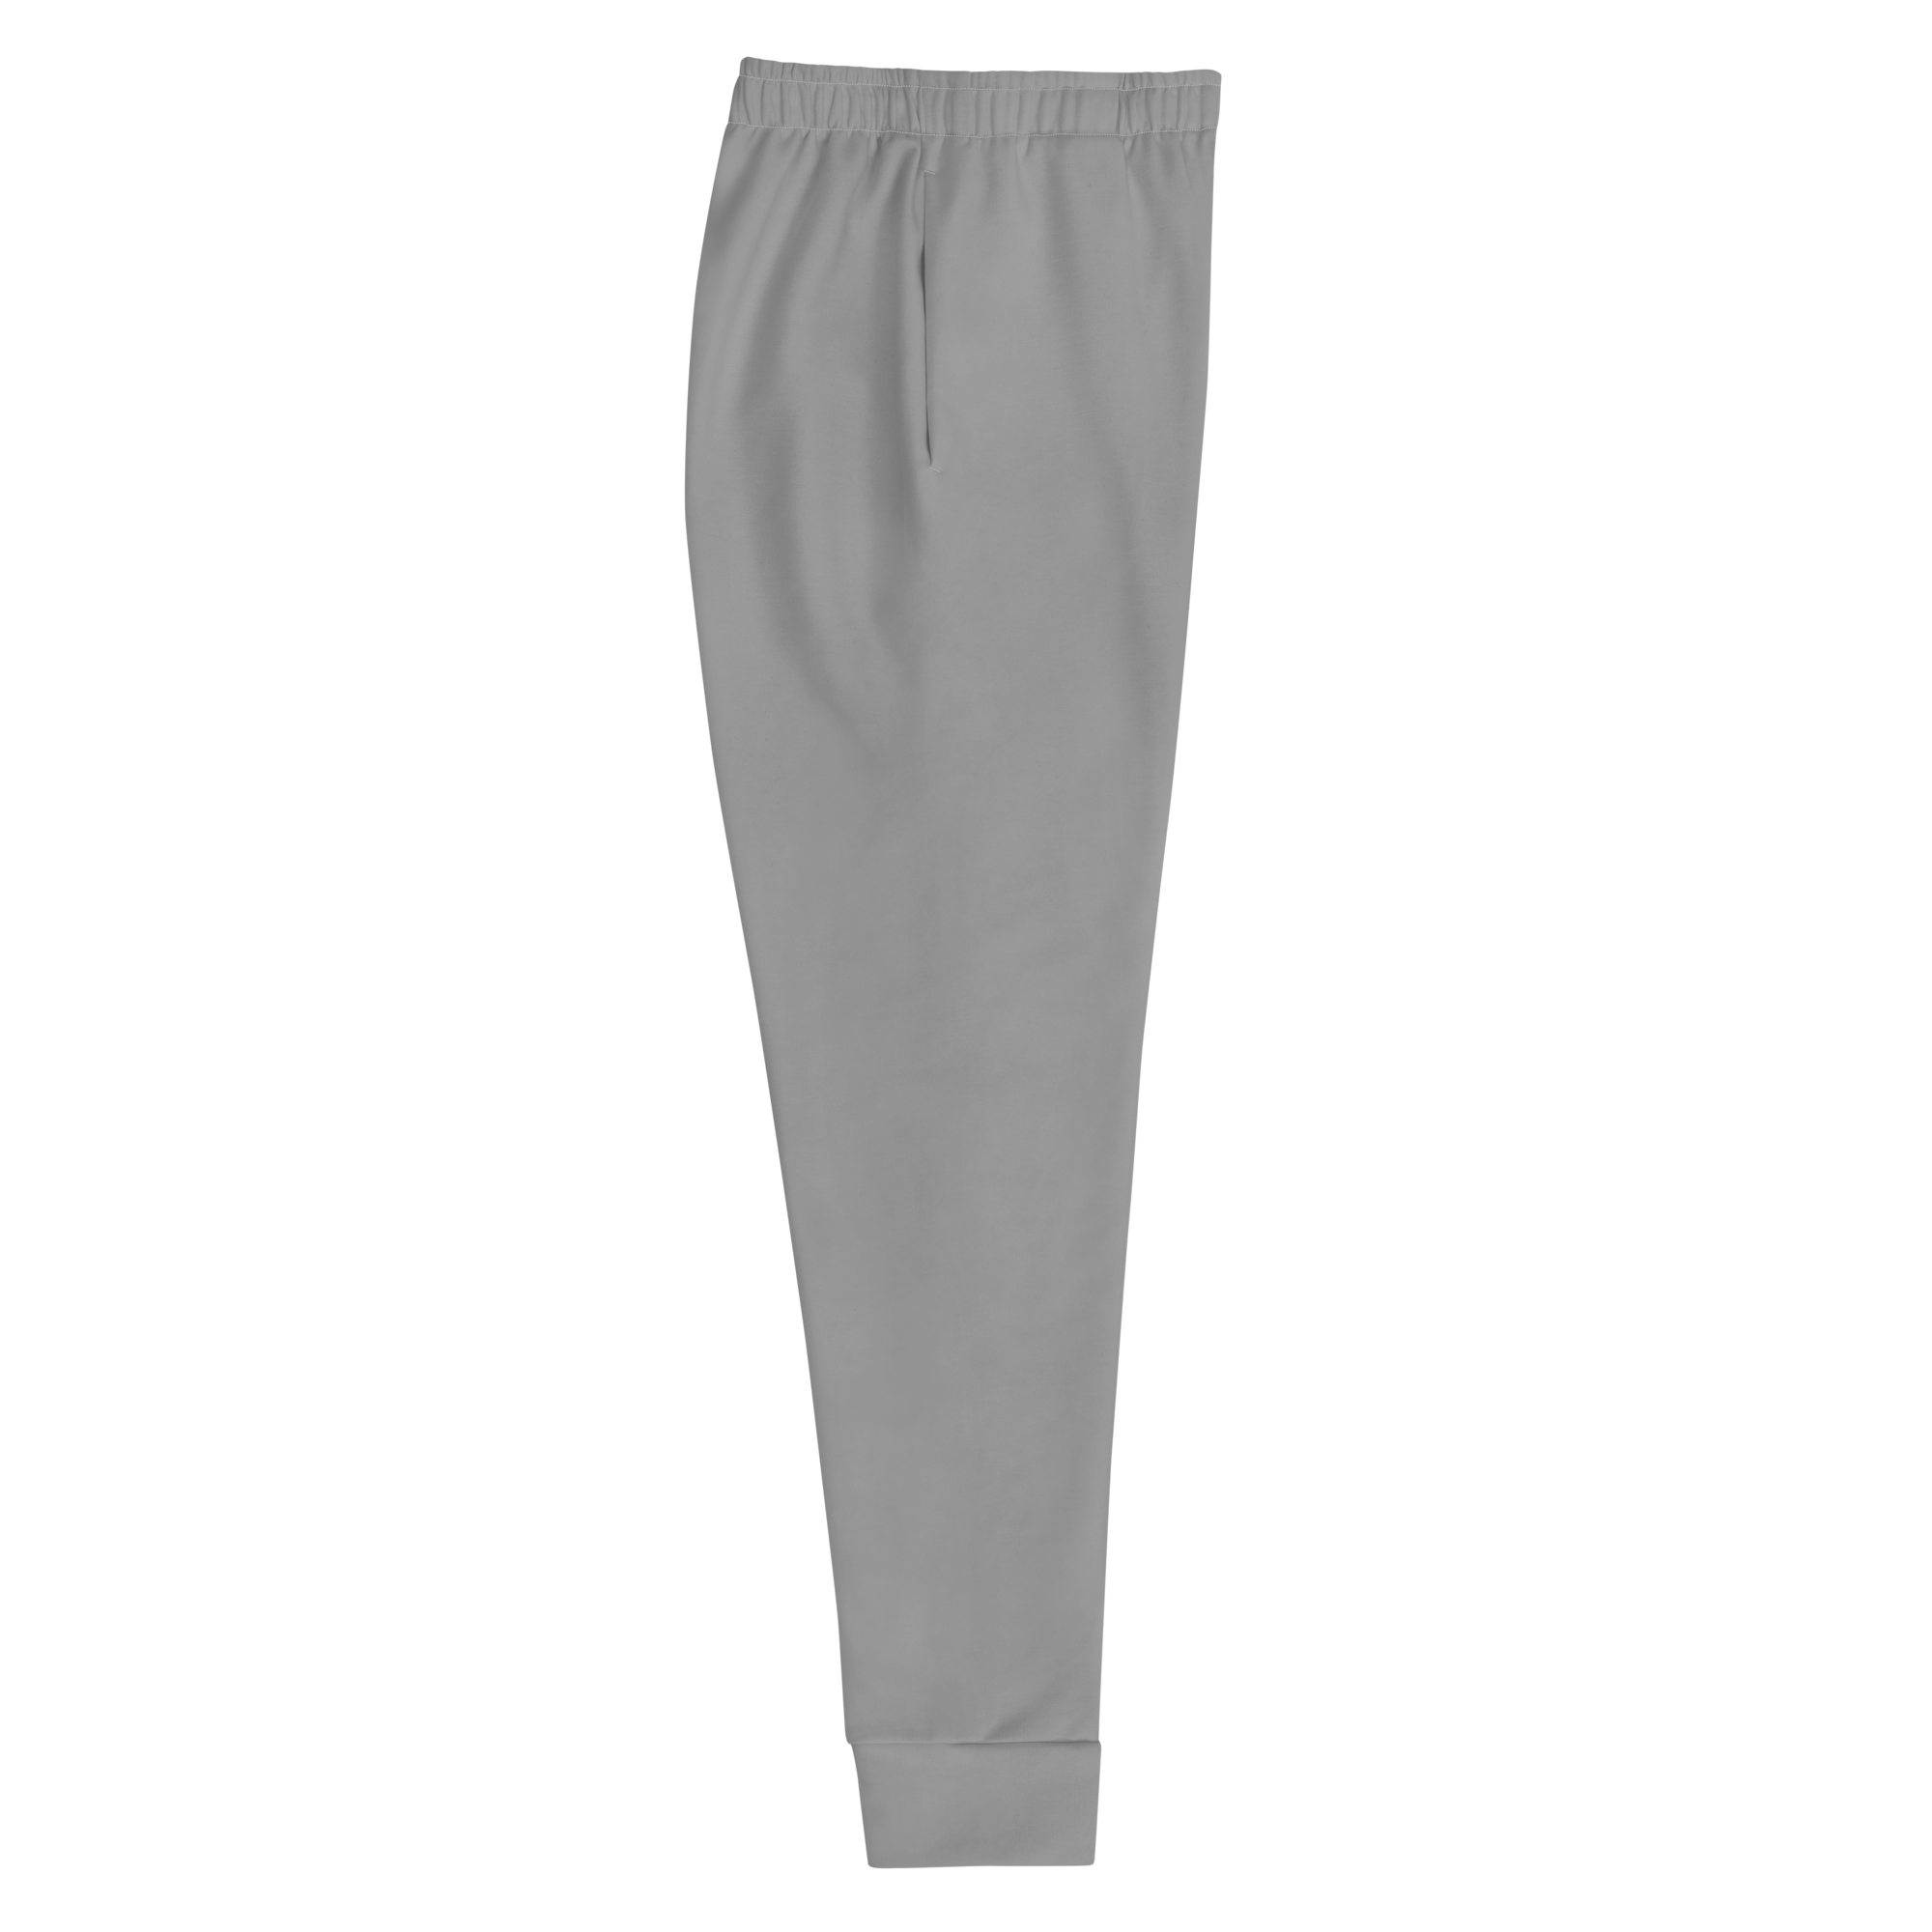 maillot.co | Two-Toned Jogger Sweatpants - Dark Grey/Light Grey right leg